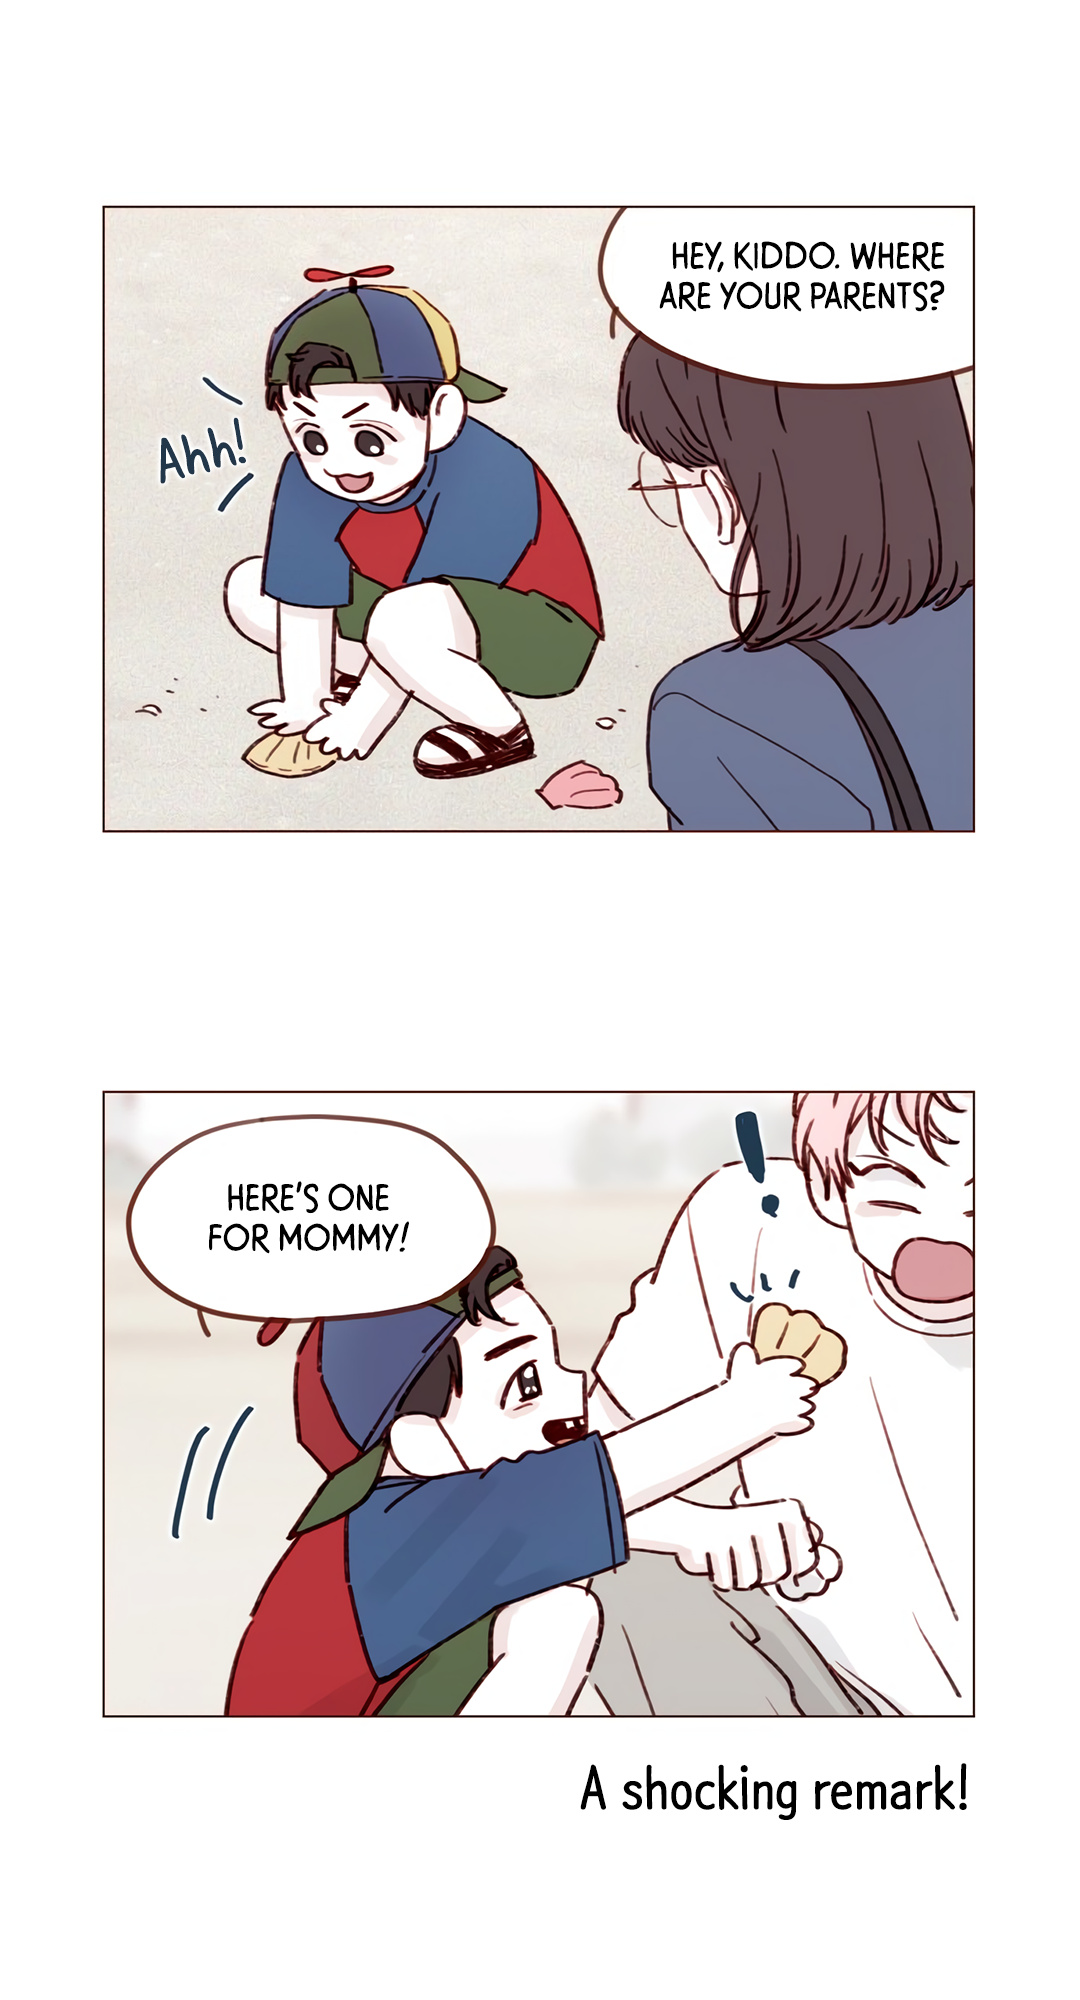 Hongshi Loves Me! - Page 3